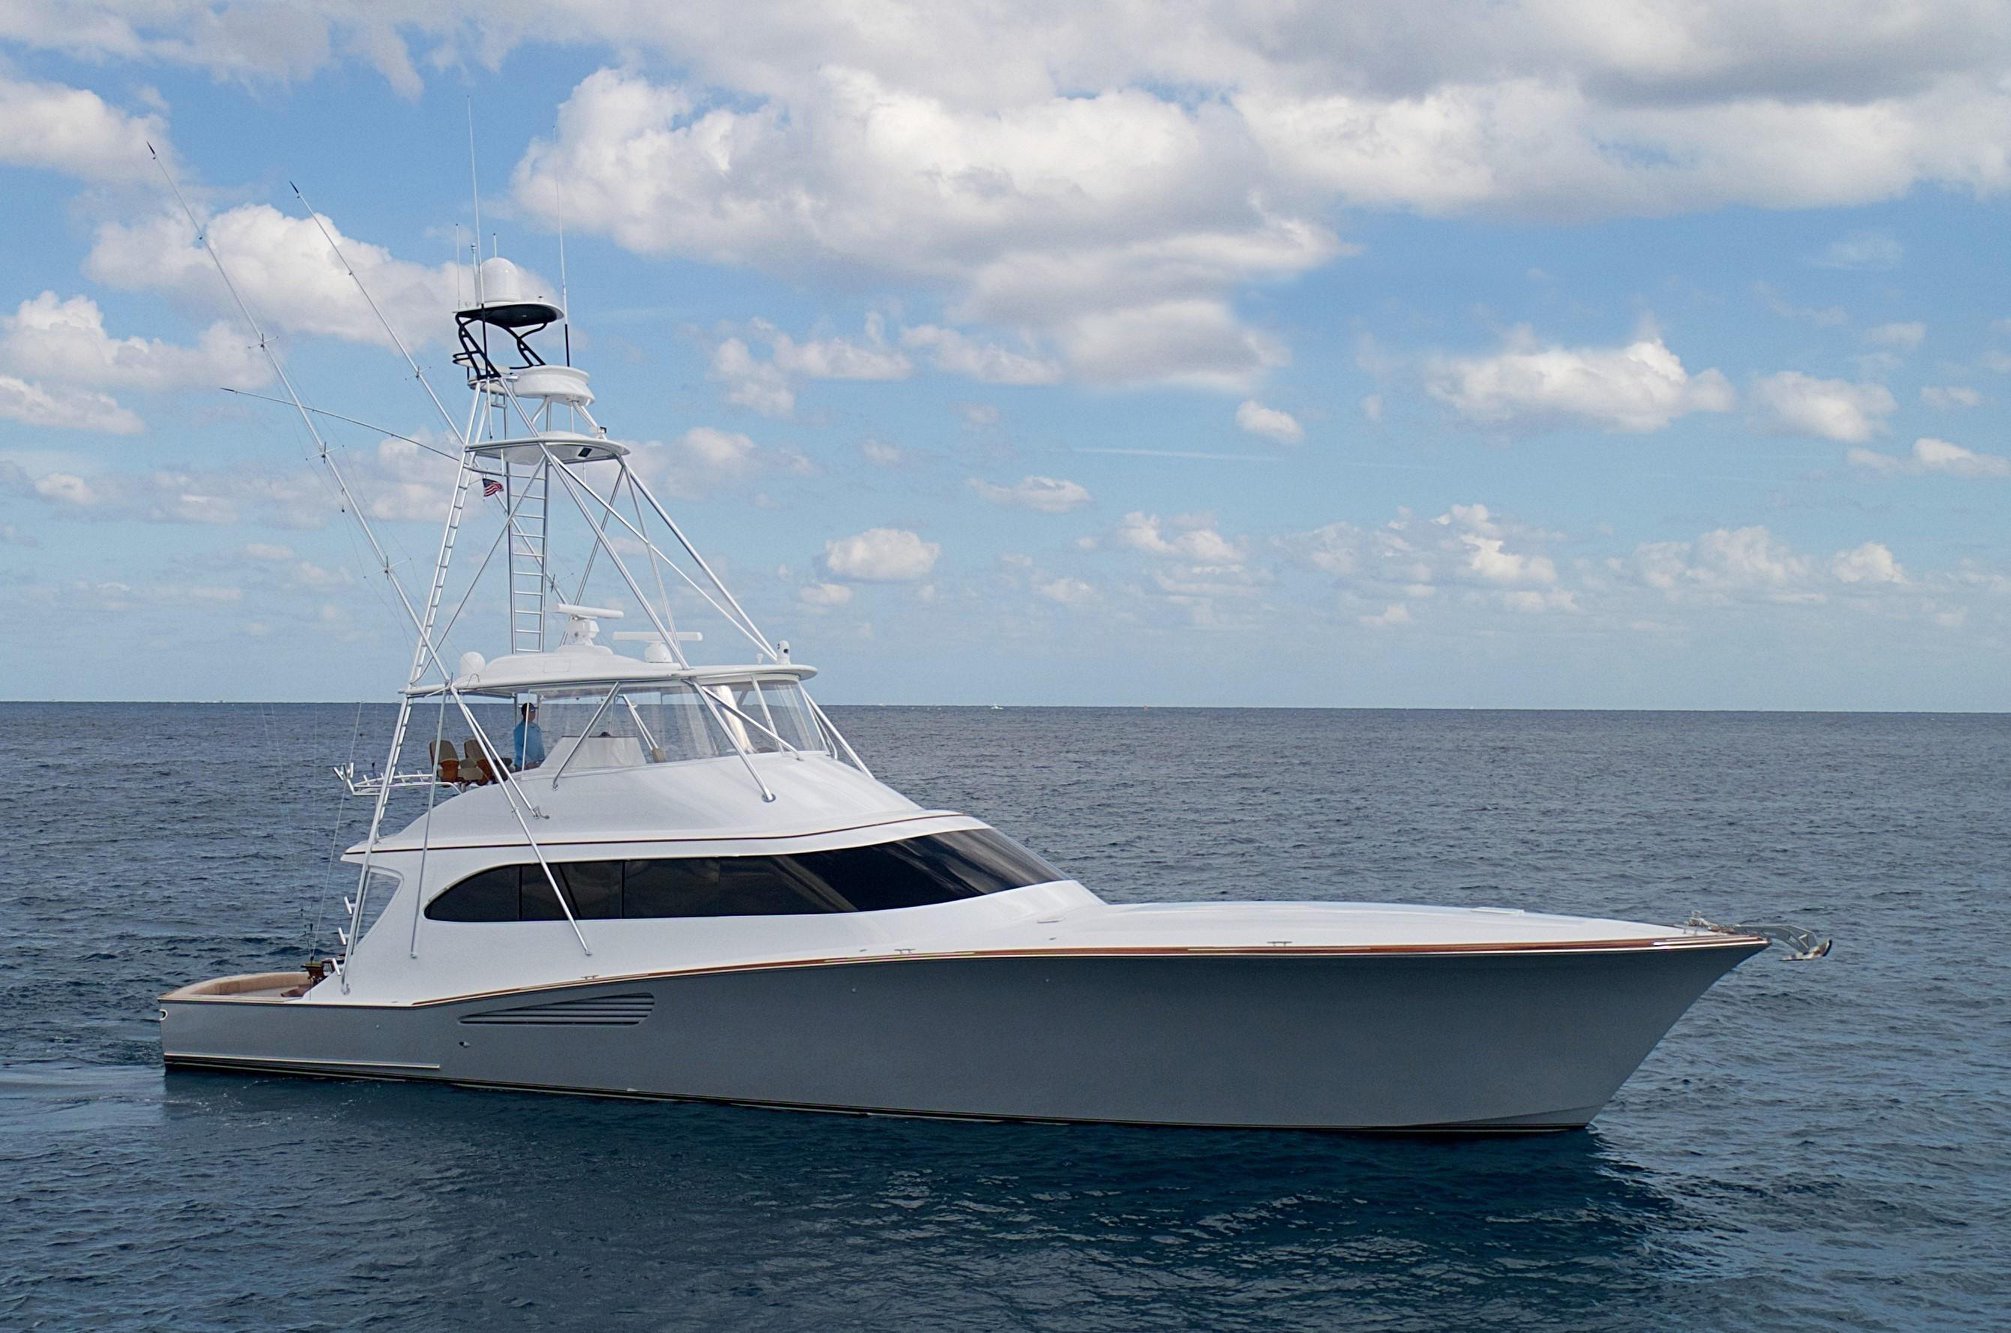 2017 Weaver 75 Custom Sportfish “Sterling” — Sold By HMY Yacht Sales